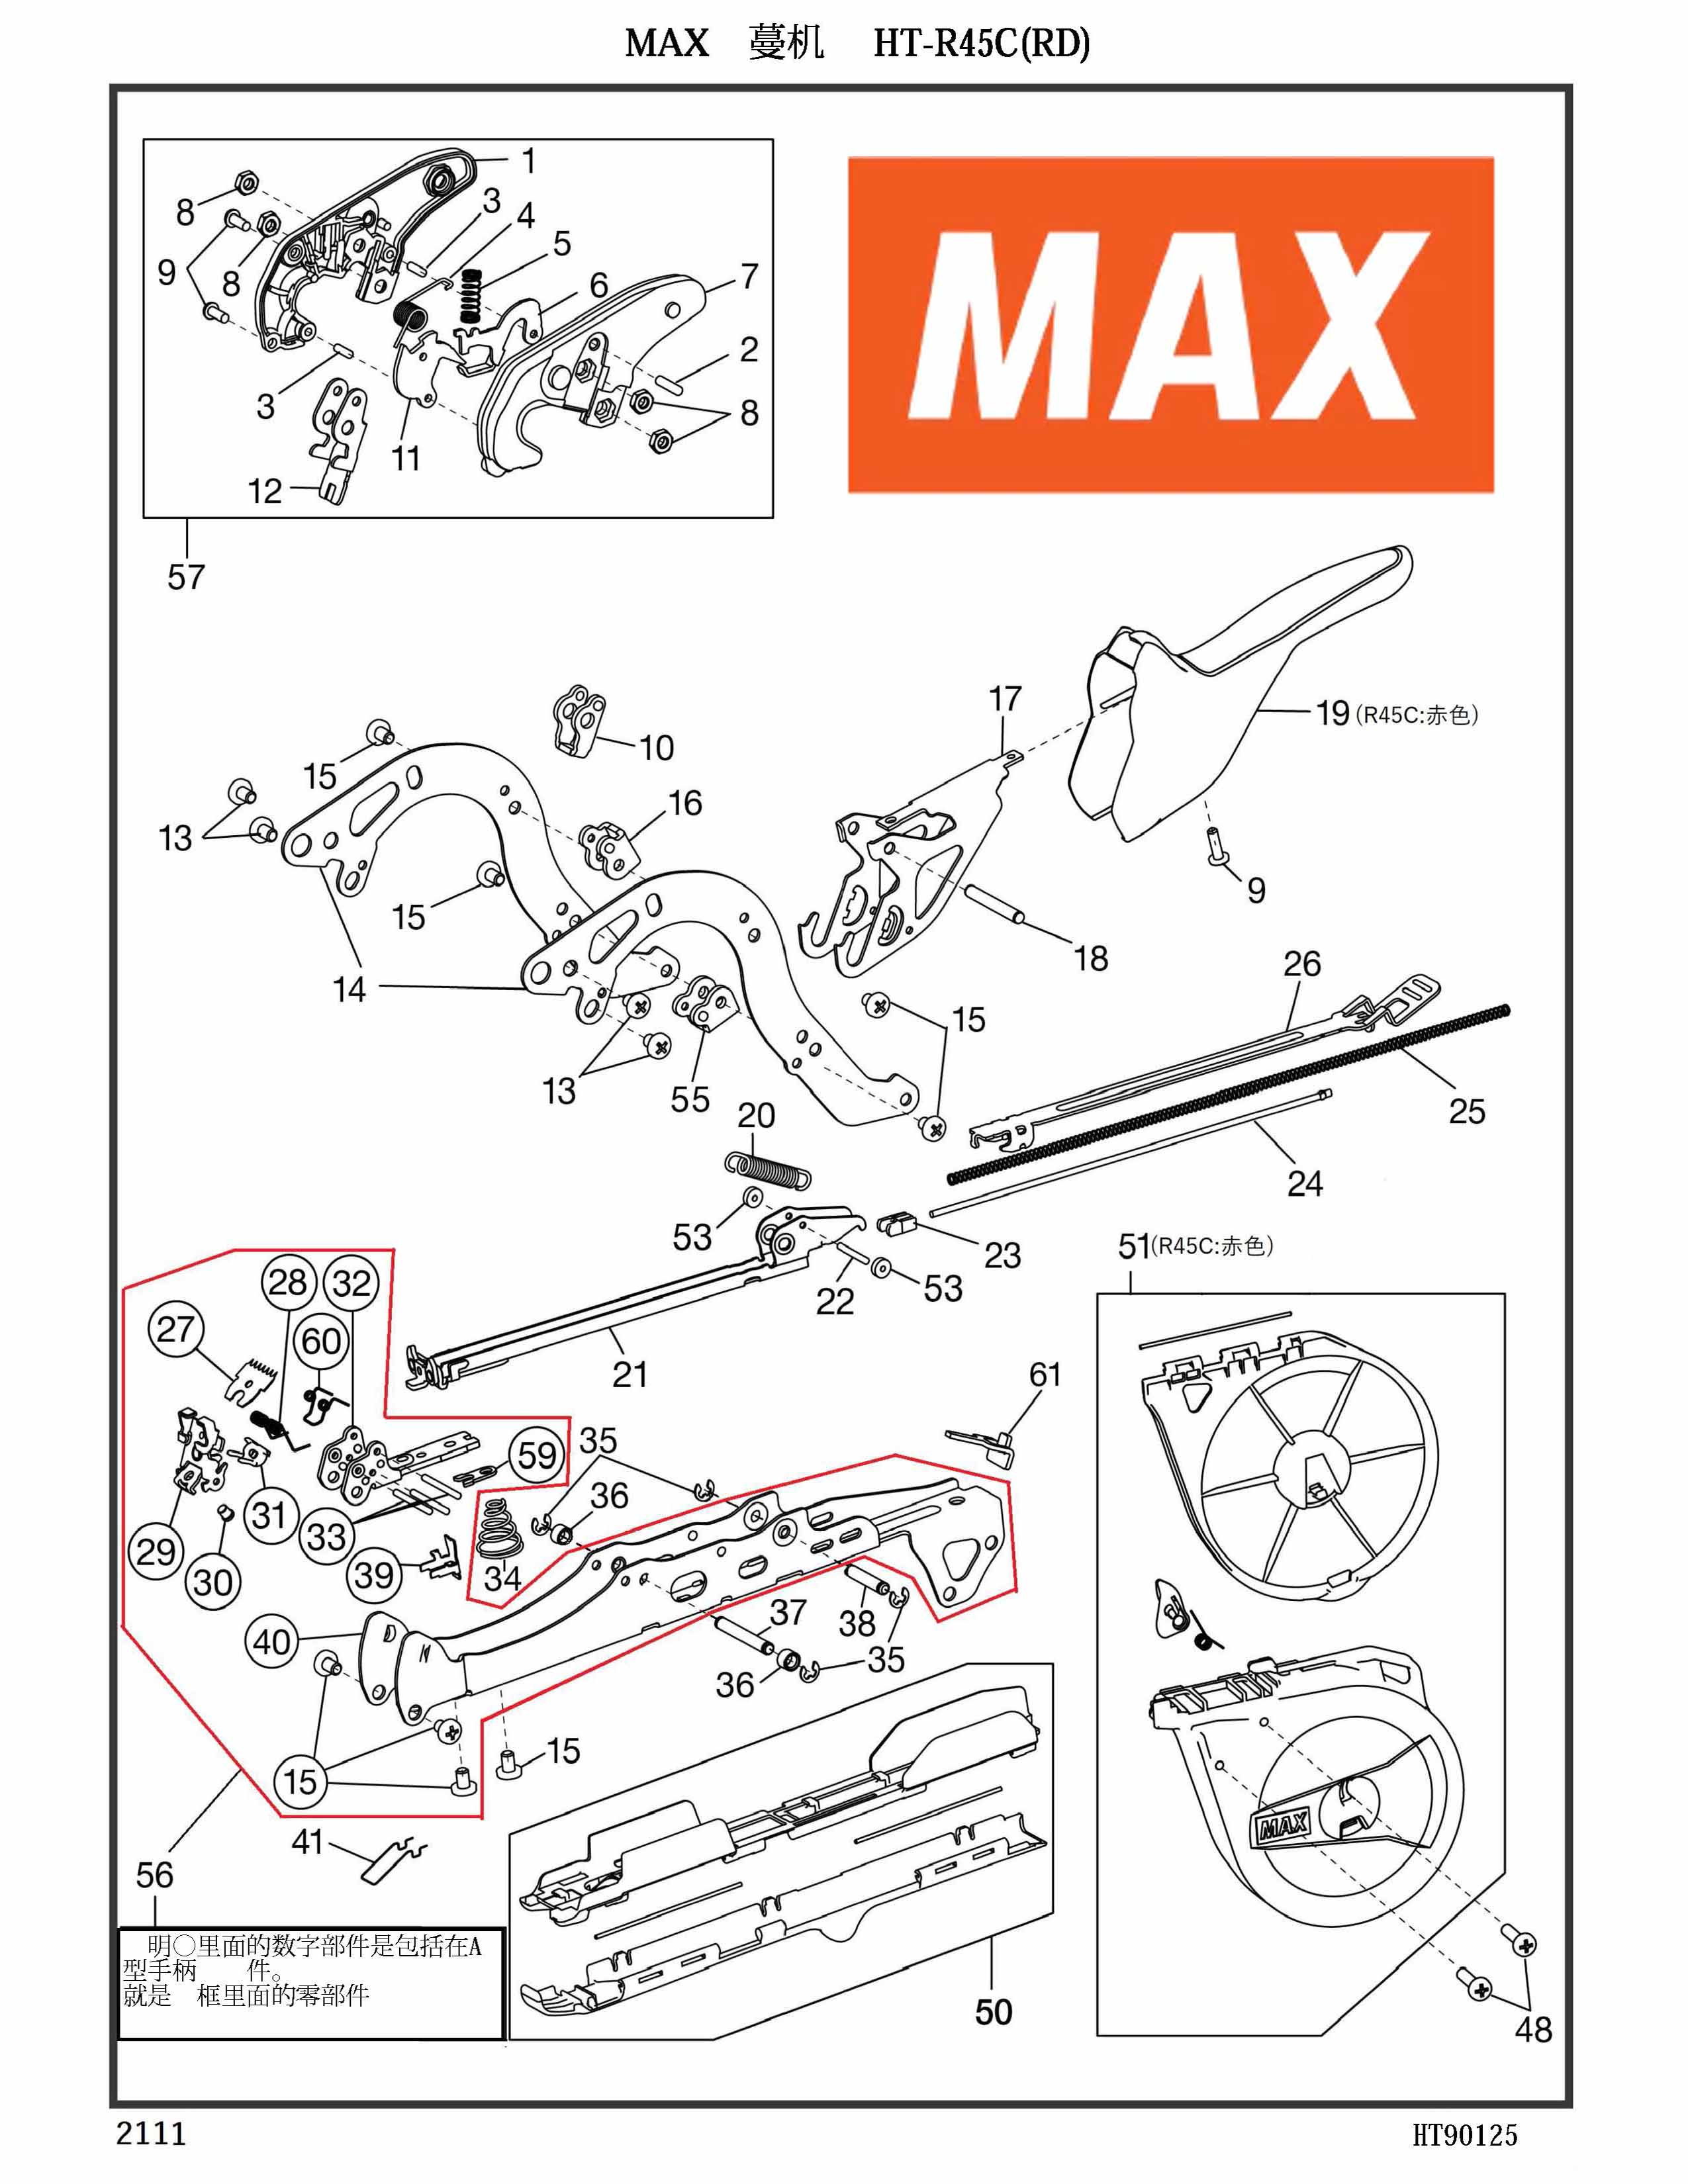 MAX Tapener Part HT11618 CLINCHER ARM (HT-R) Fits MAX HT-R45L(O) R45C(RD) HT-S45E HT-R1 HT-R2 #14